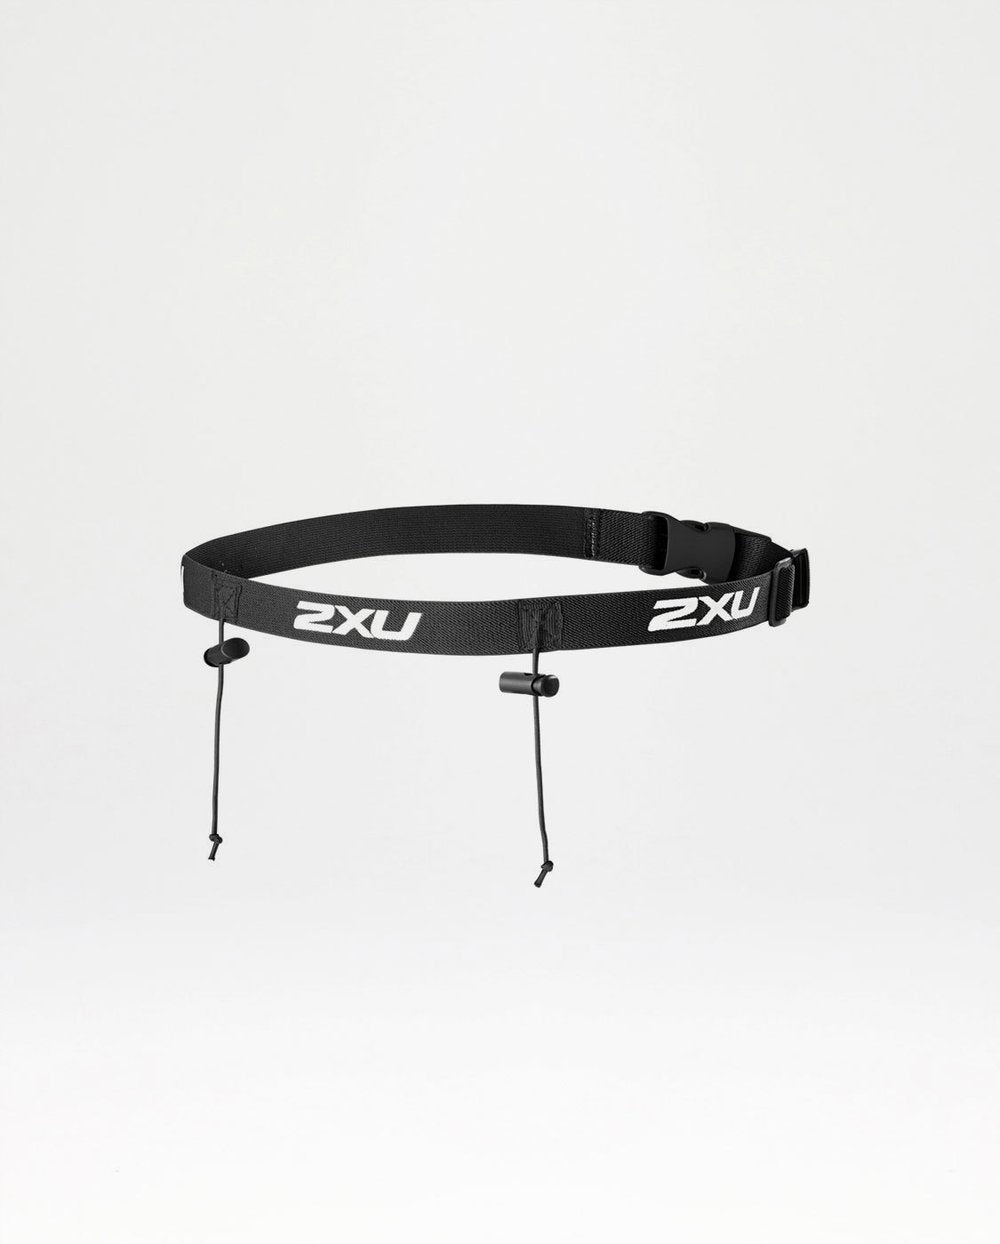 2XU South Africa - 2XU Race Belt - Black/Black